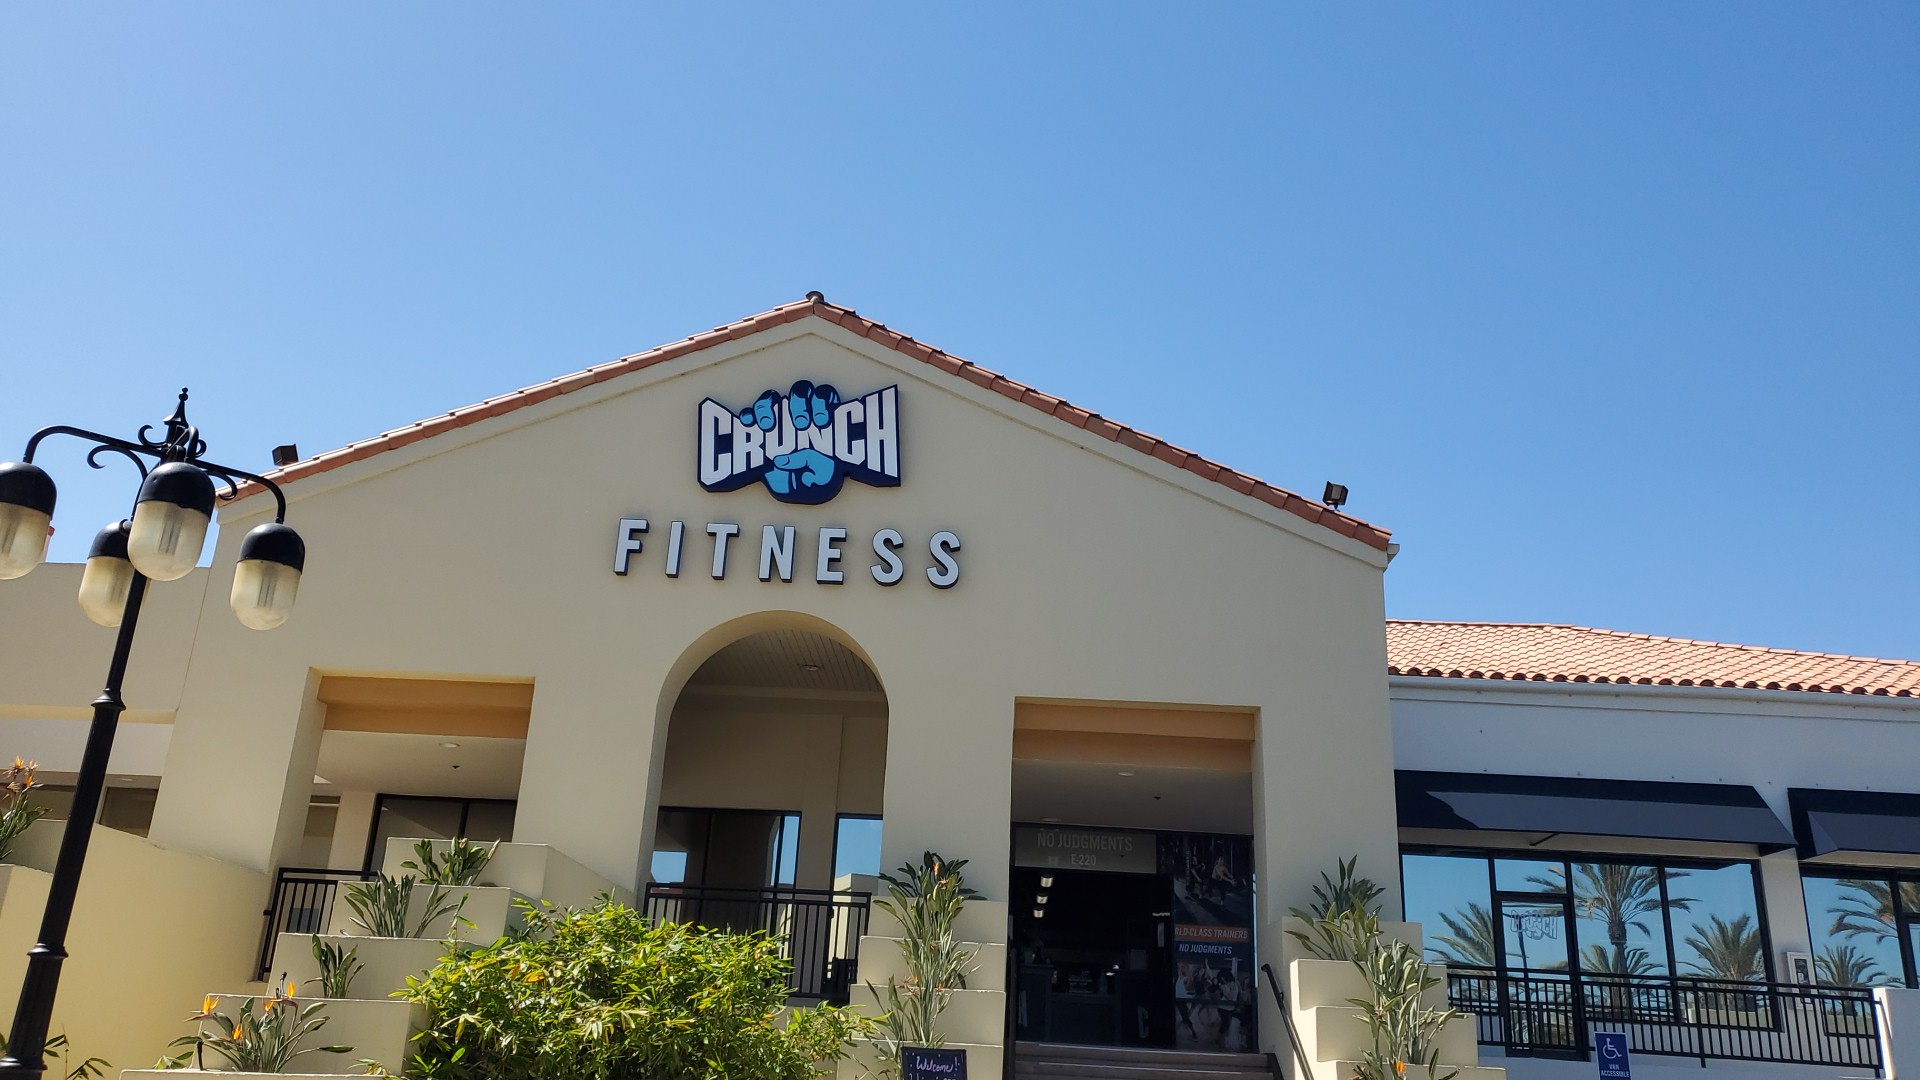 Crunch Fitness - San Clemente